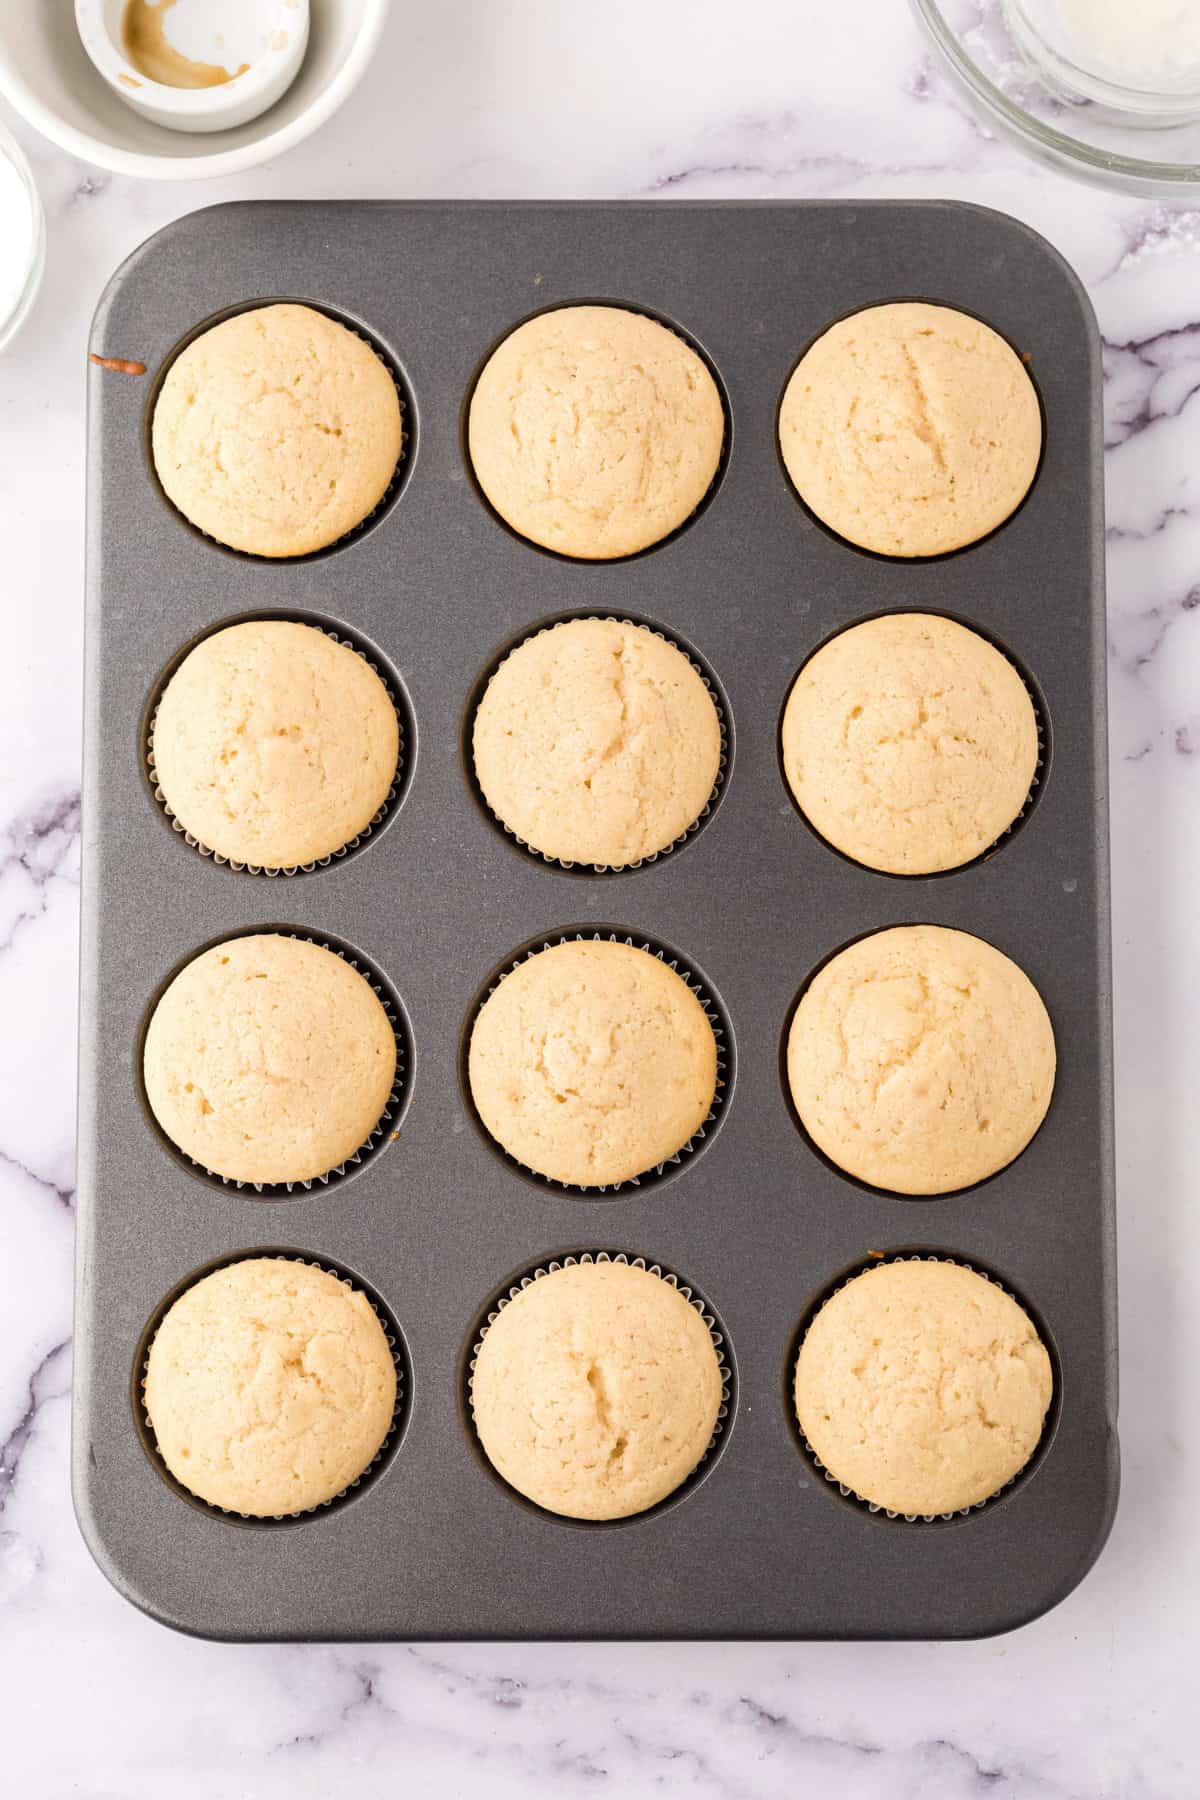 vanilla cupcakes baked into the tin.